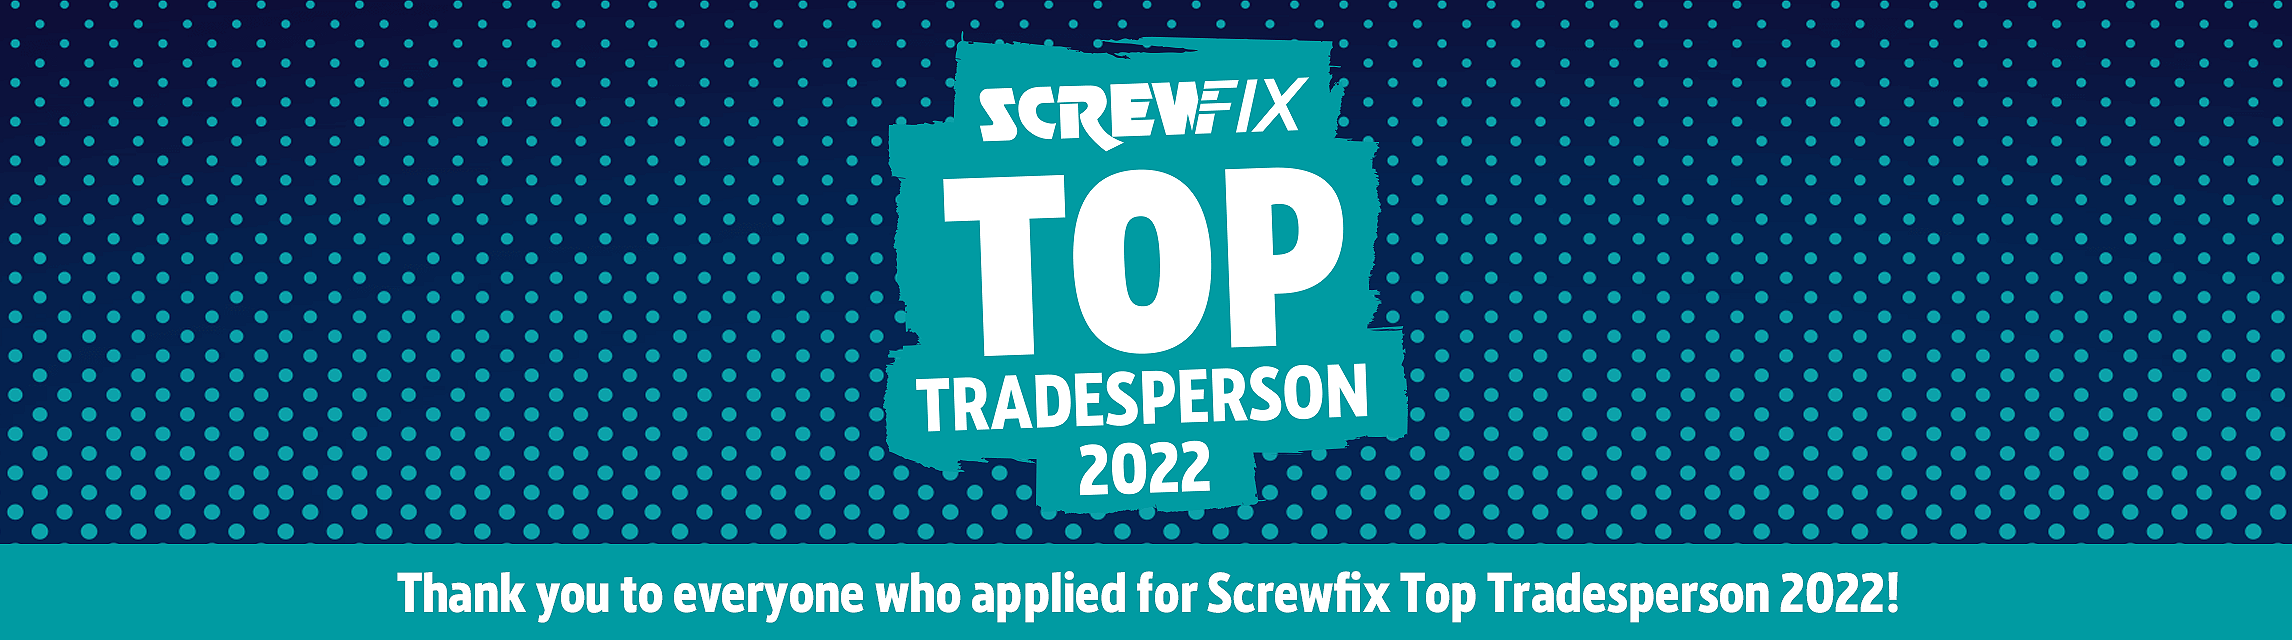 Screwfix Top Tradesperson